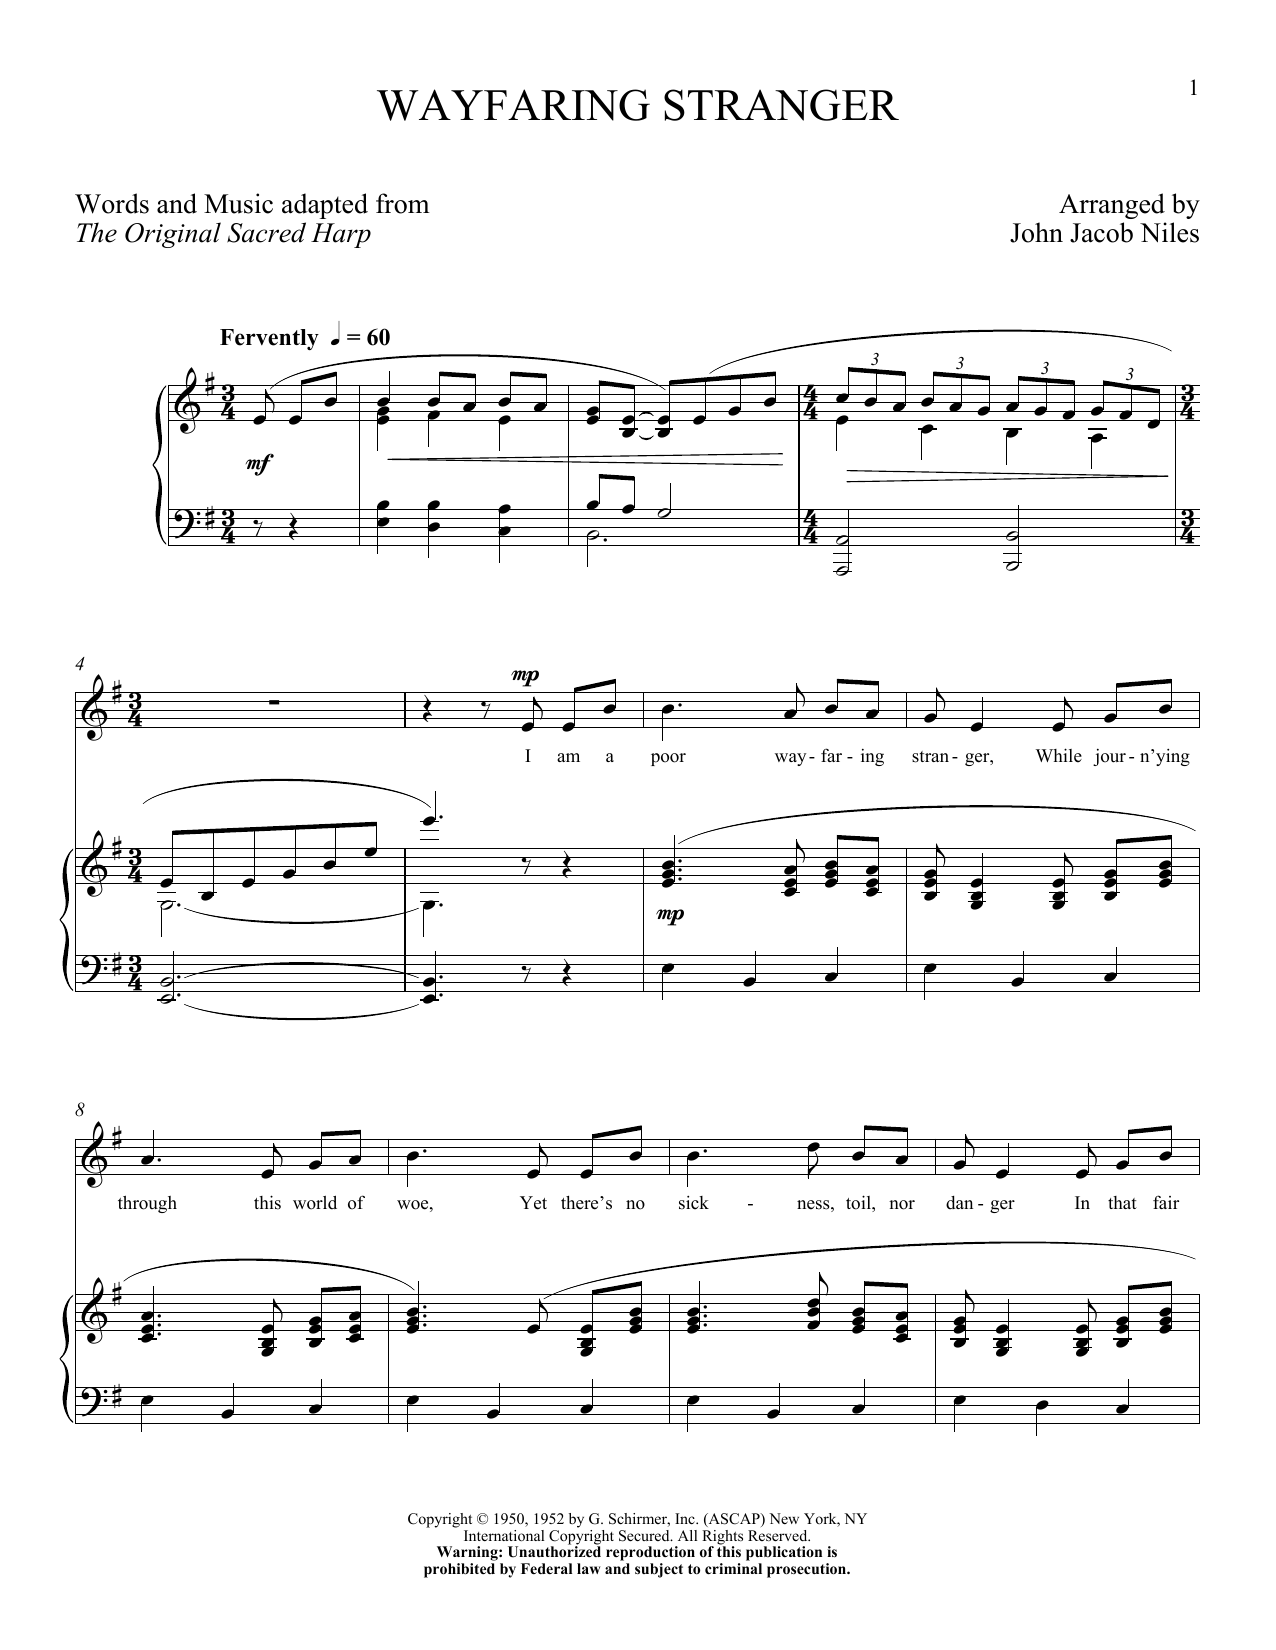 John Jacob Niles Wayfaring Stranger sheet music notes and chords arranged for Piano & Vocal